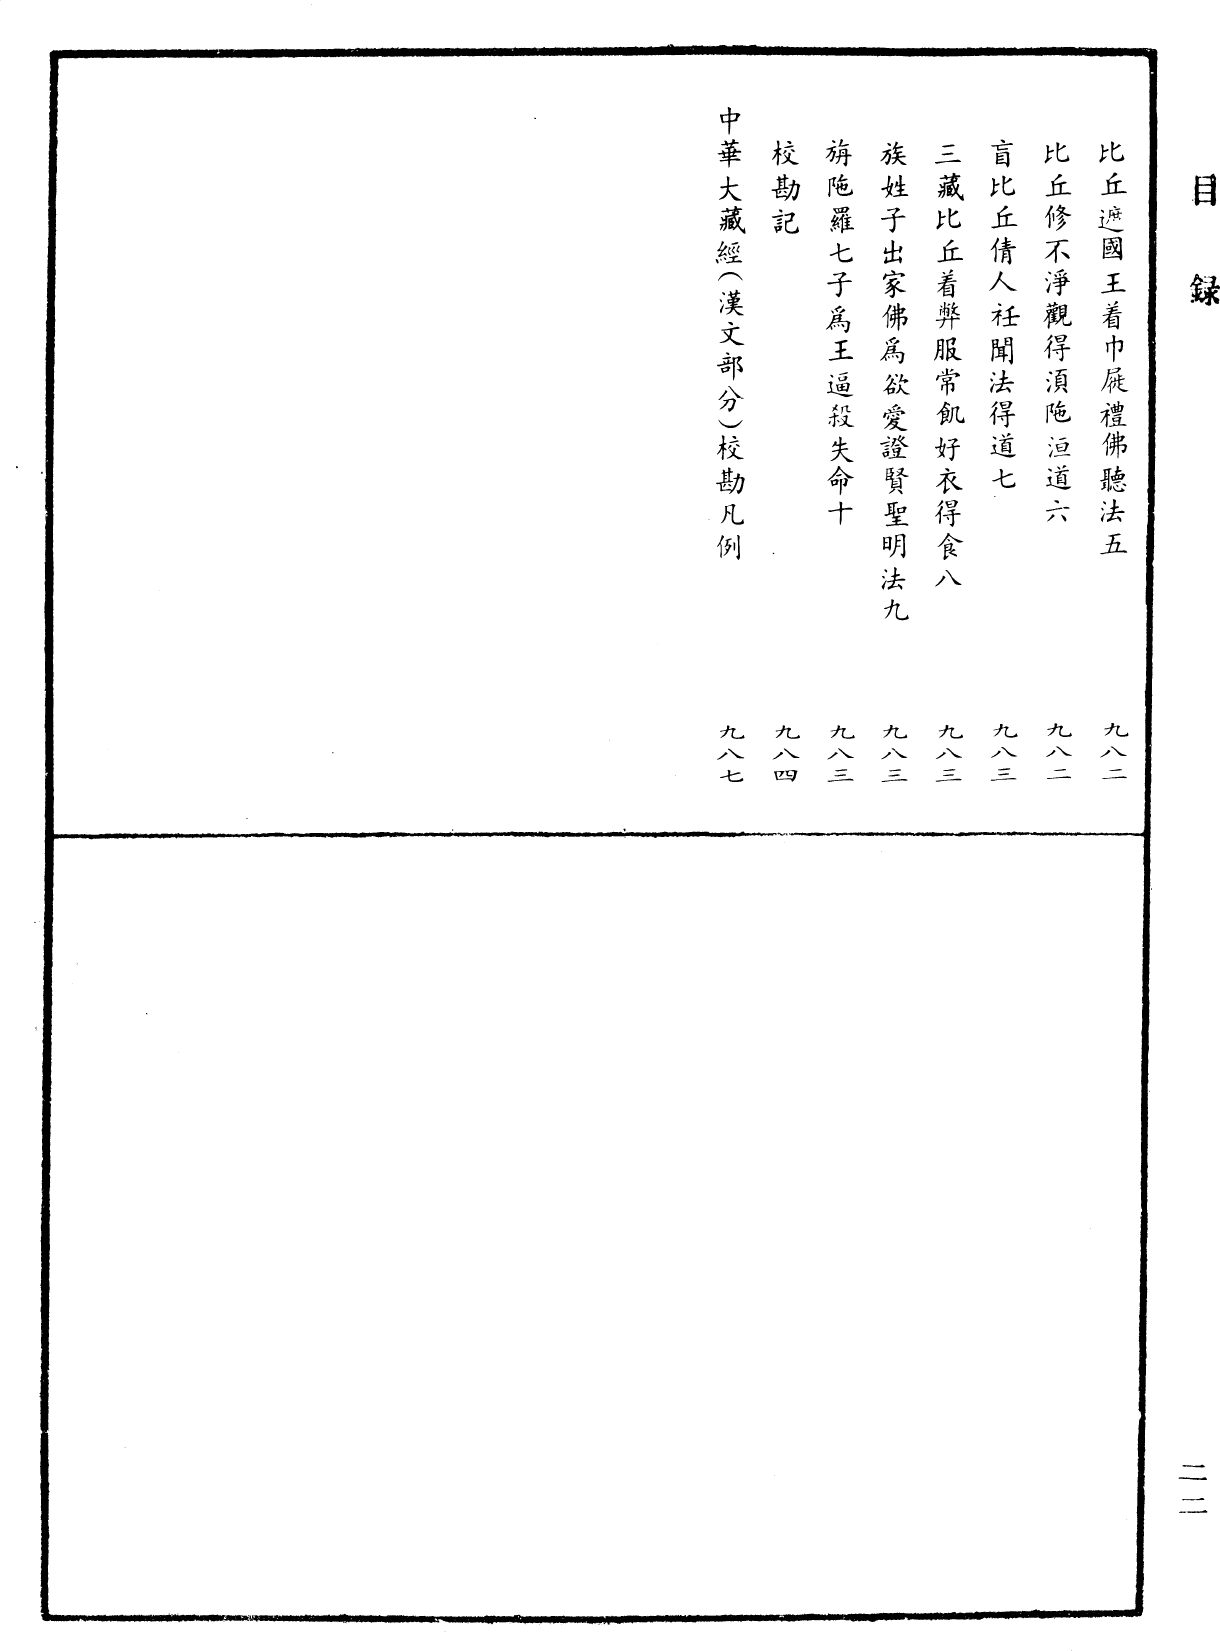 File:《中華大藏經》 第52冊 目録 (22).png